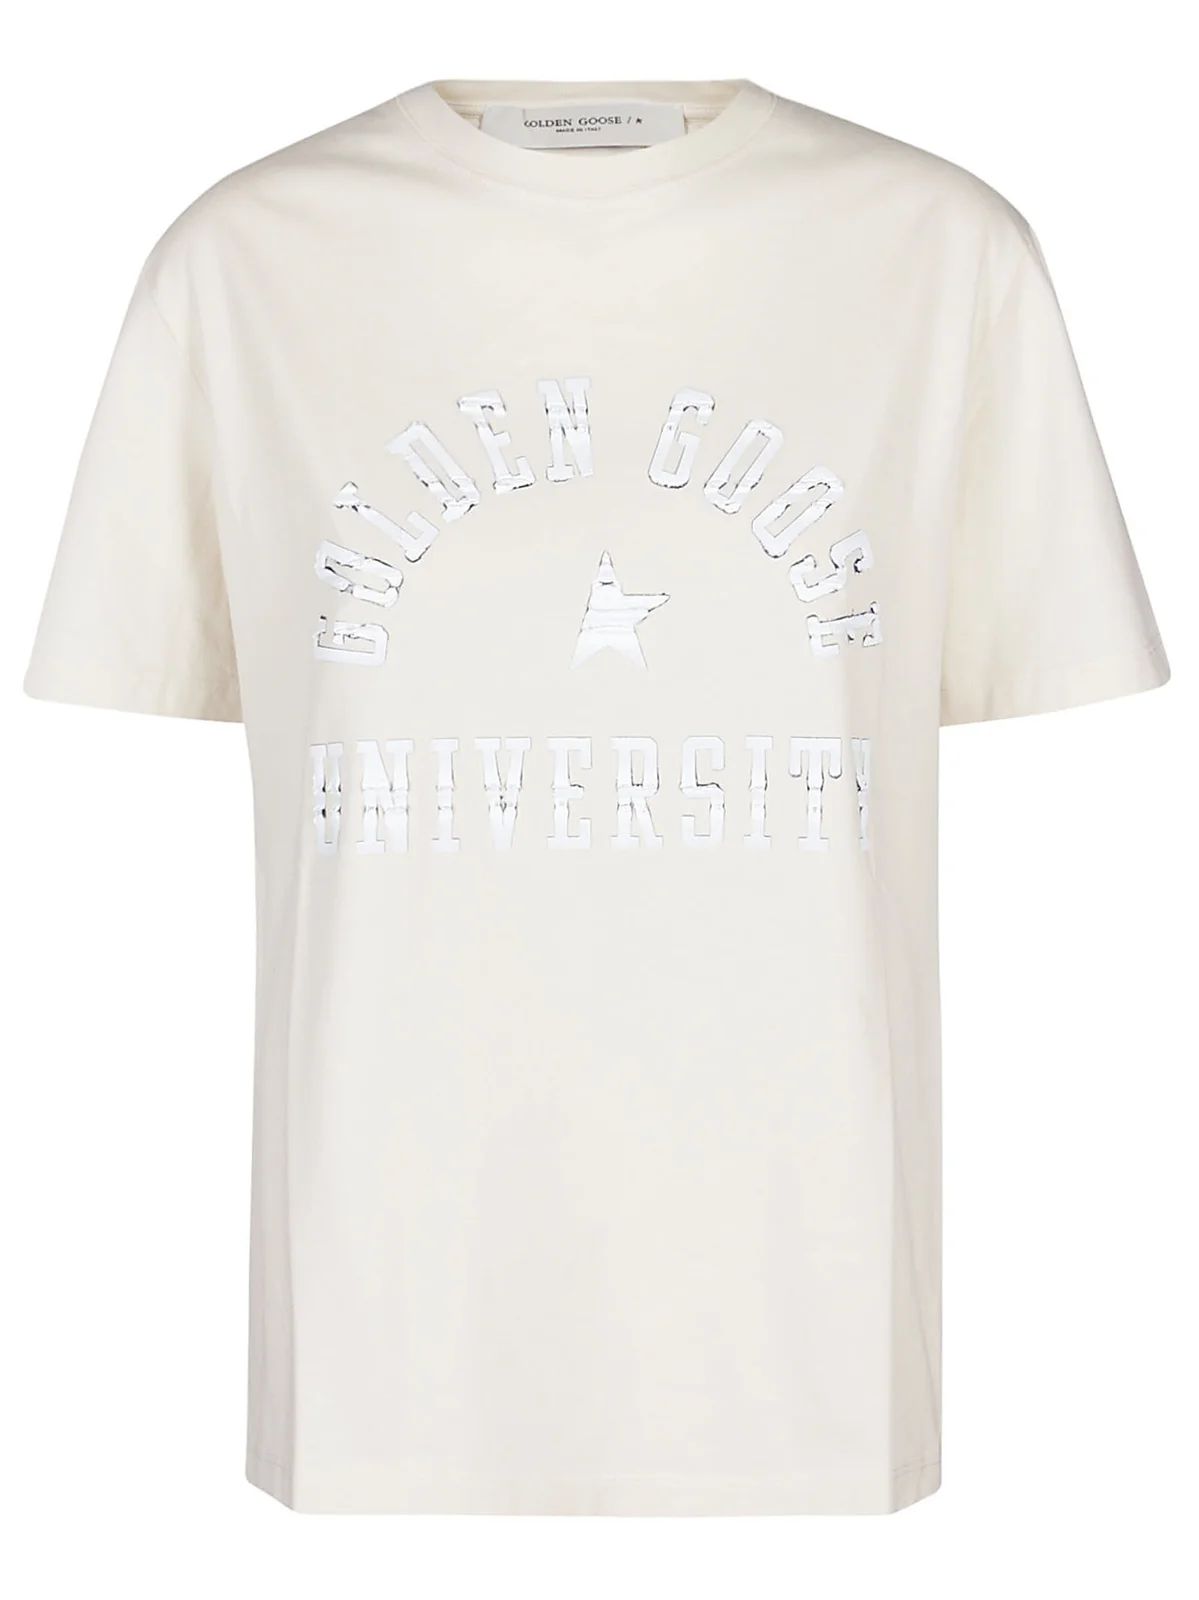 Golden Goose Deluxe Brand Logo Detailed T-Shirt | Cettire Global